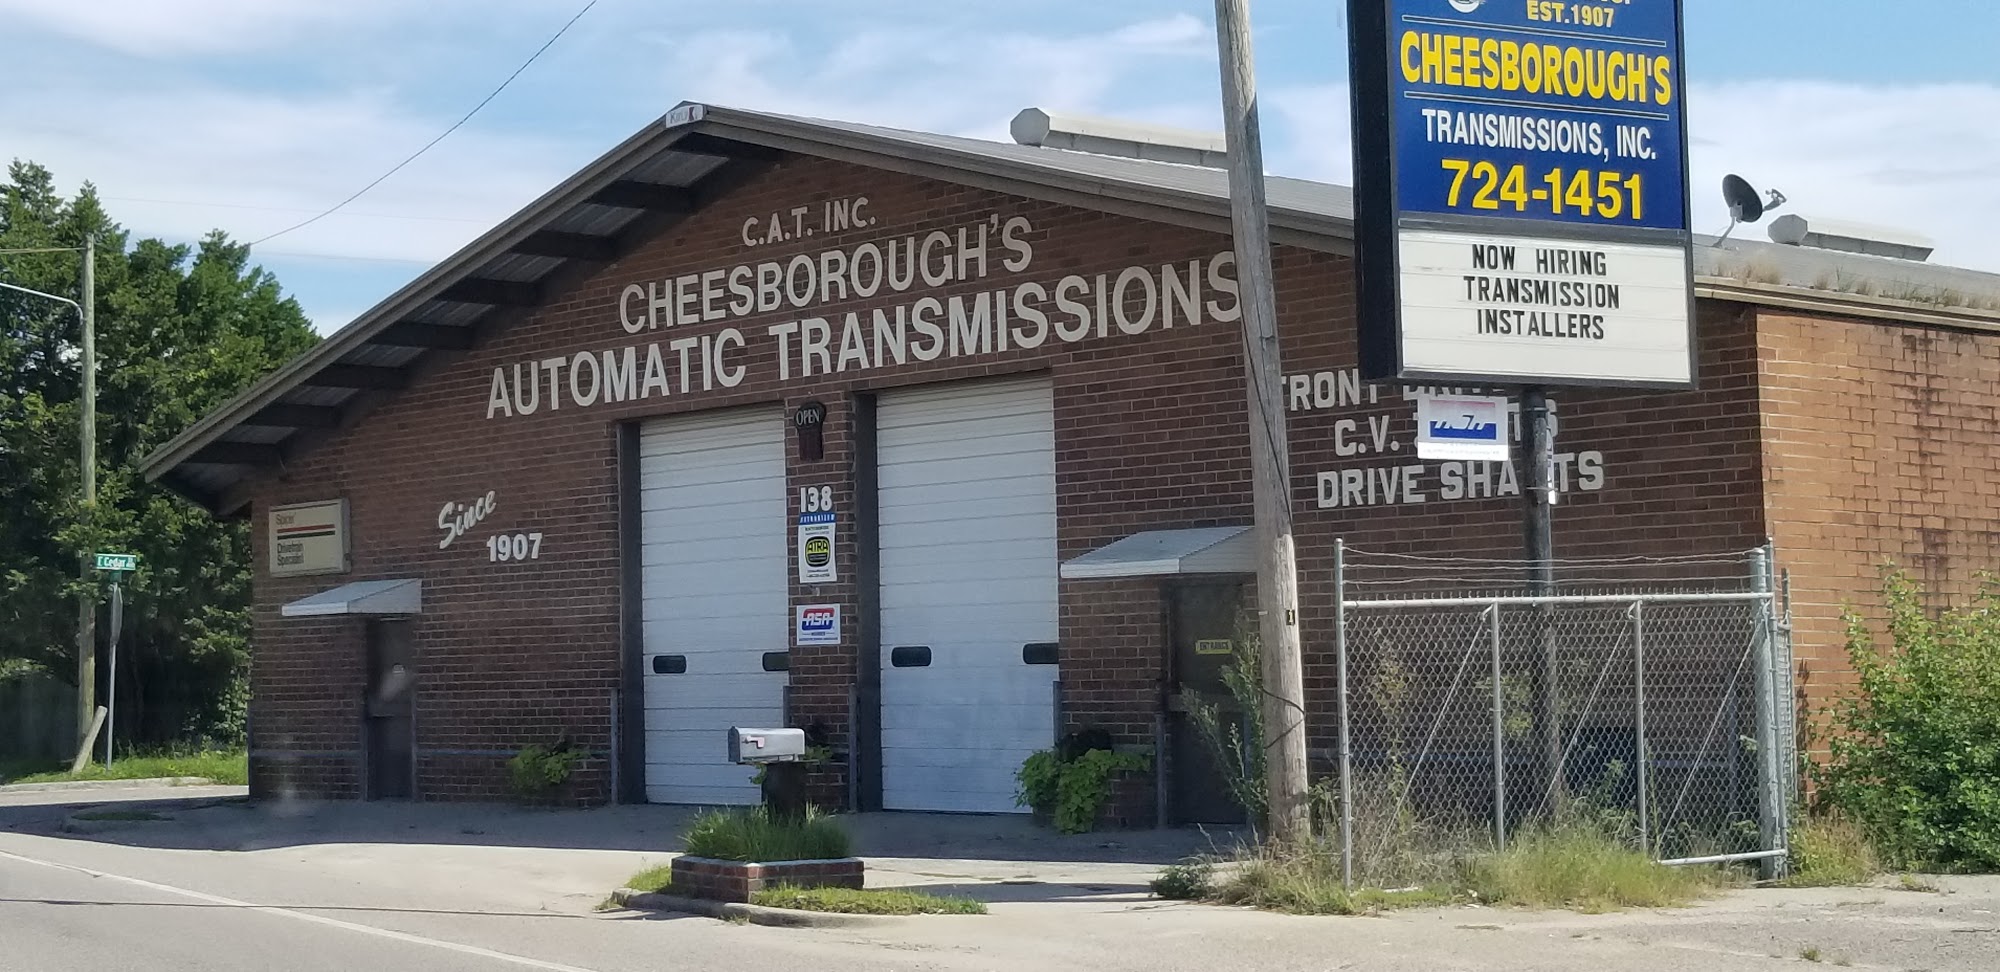 Cheesborough's Automatic Transmissions Inc